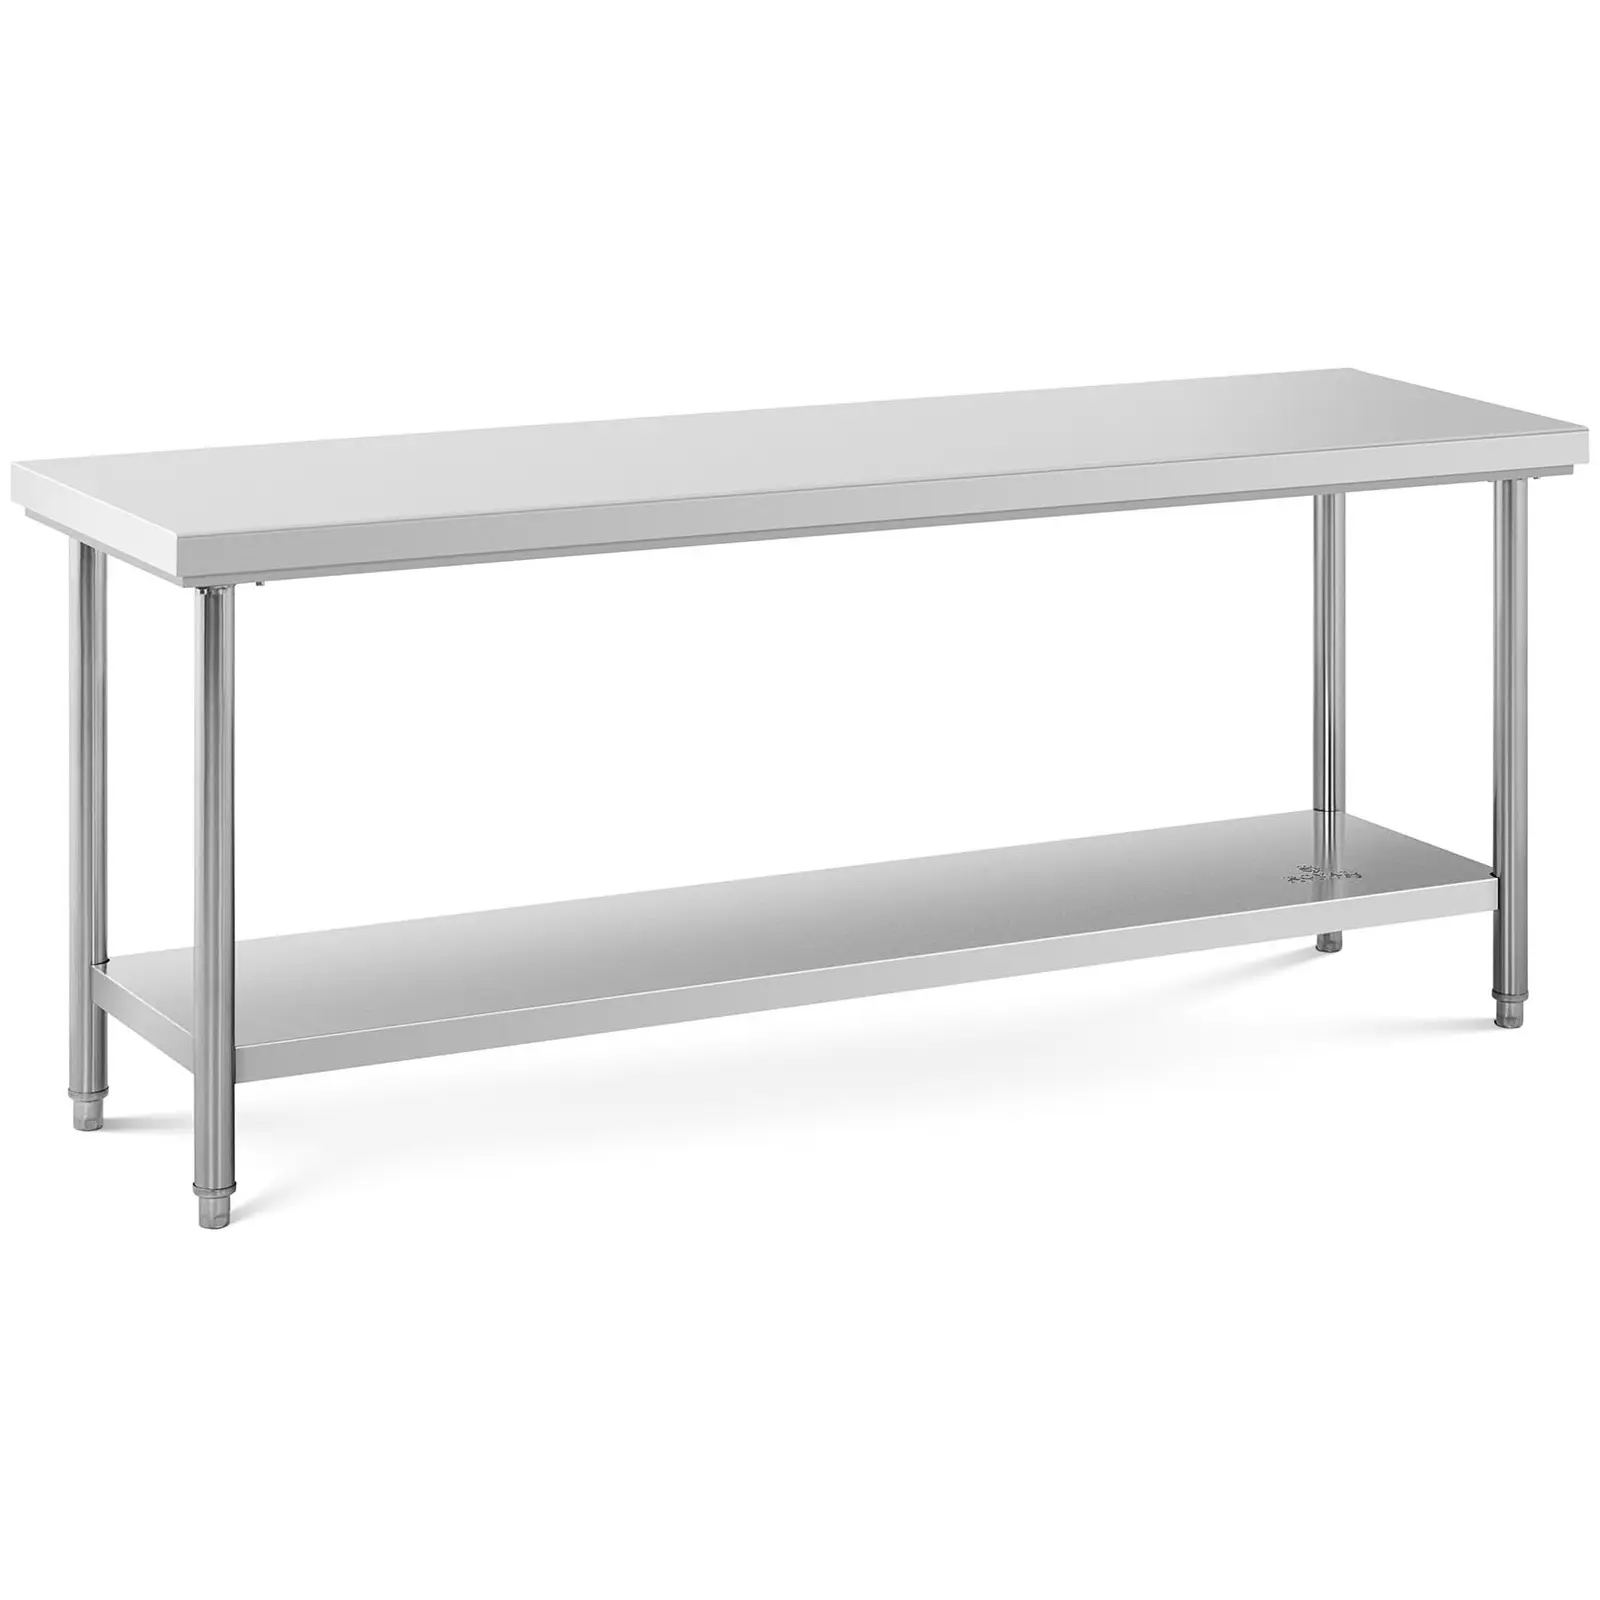 Radni stol od nehrđajućeg čelika - 200 x 60 cm - nosivost 195 kg